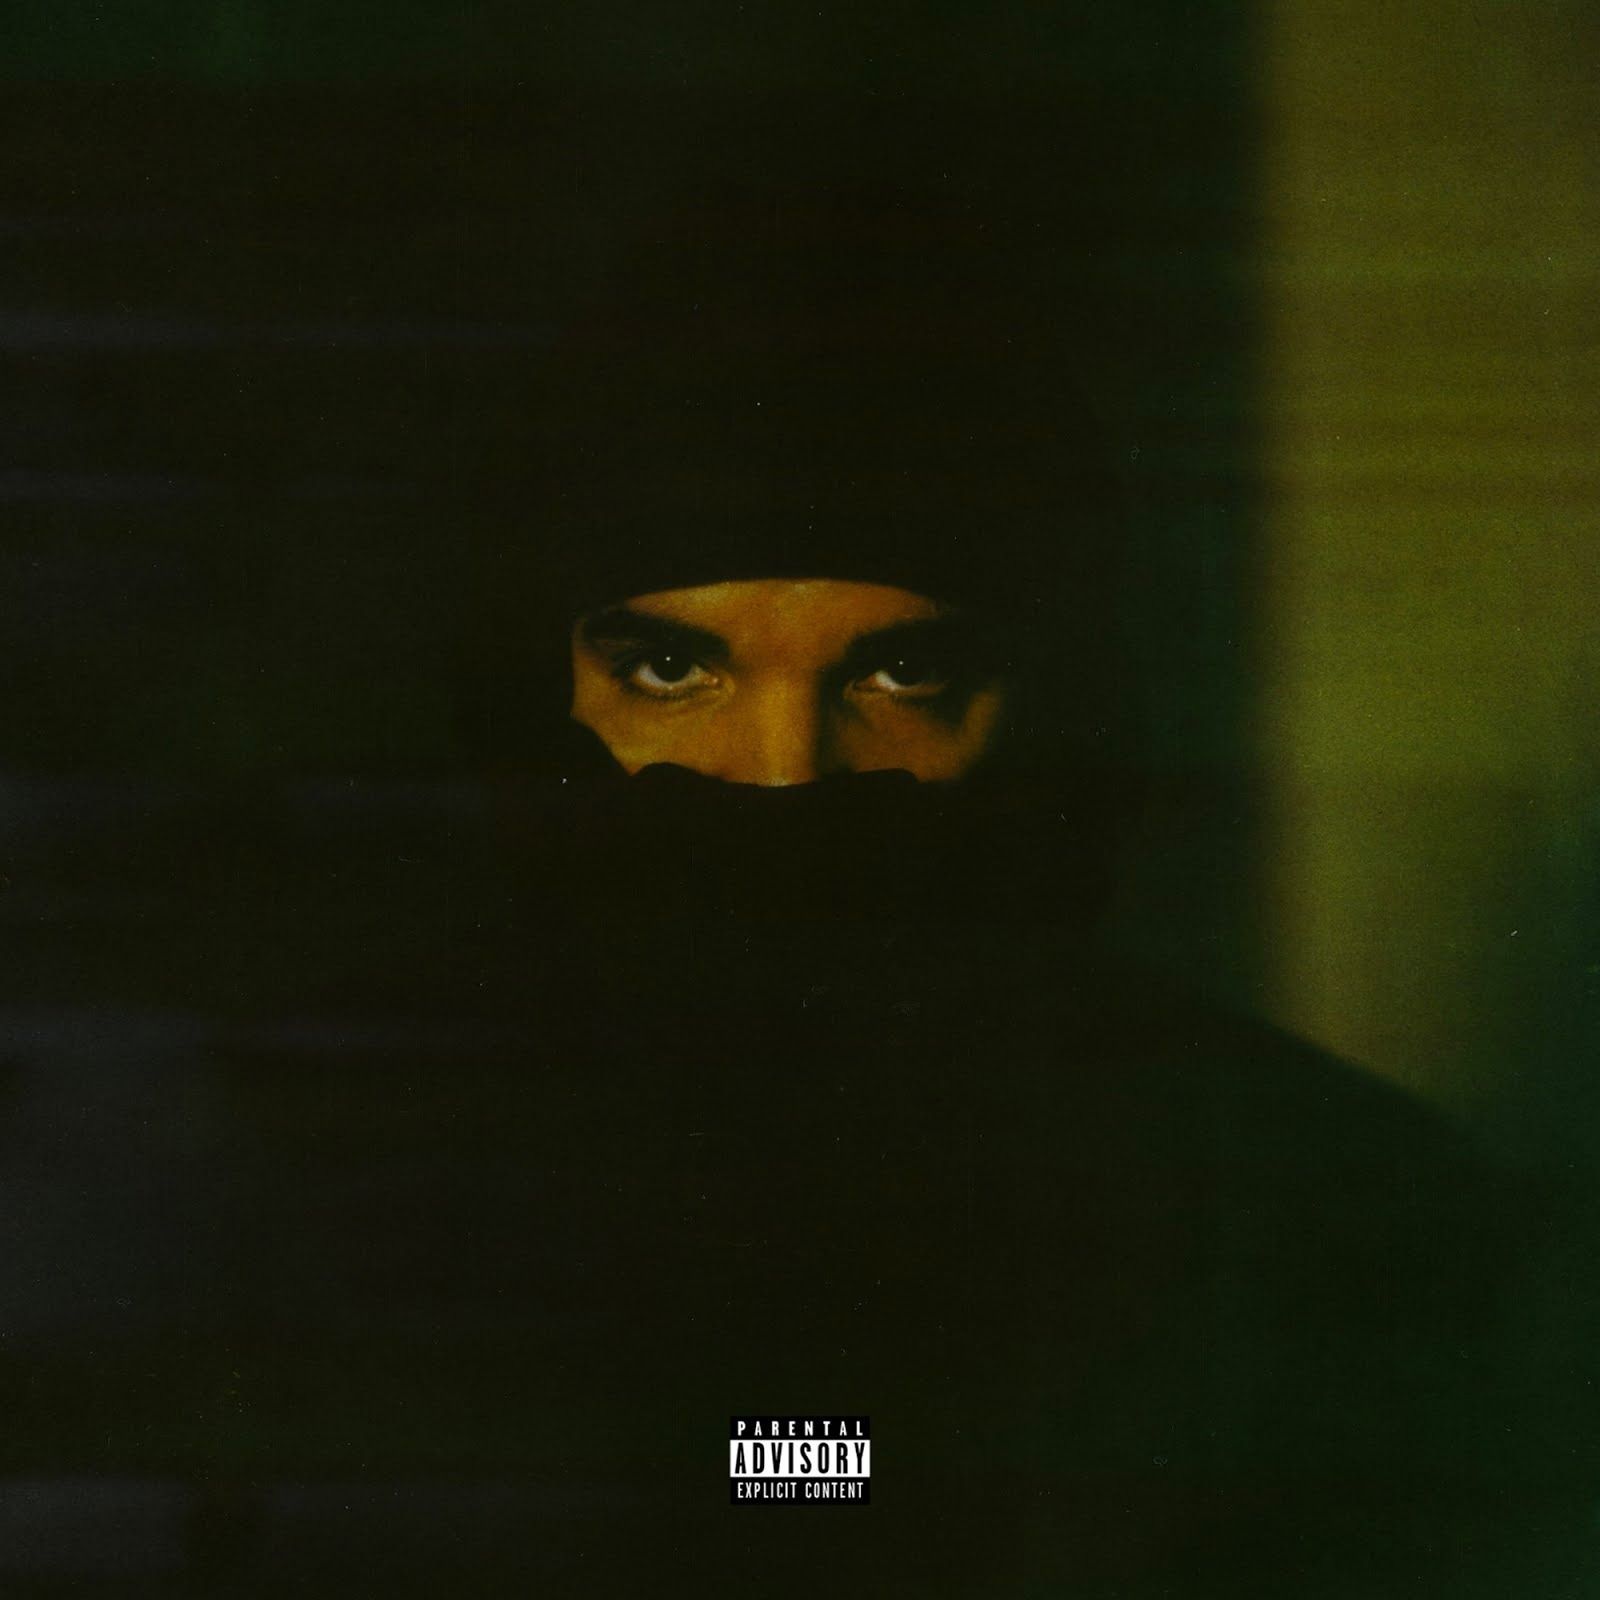 Drake Lane Demo Tapes. Iconic album covers, Music album cover, Rap album covers